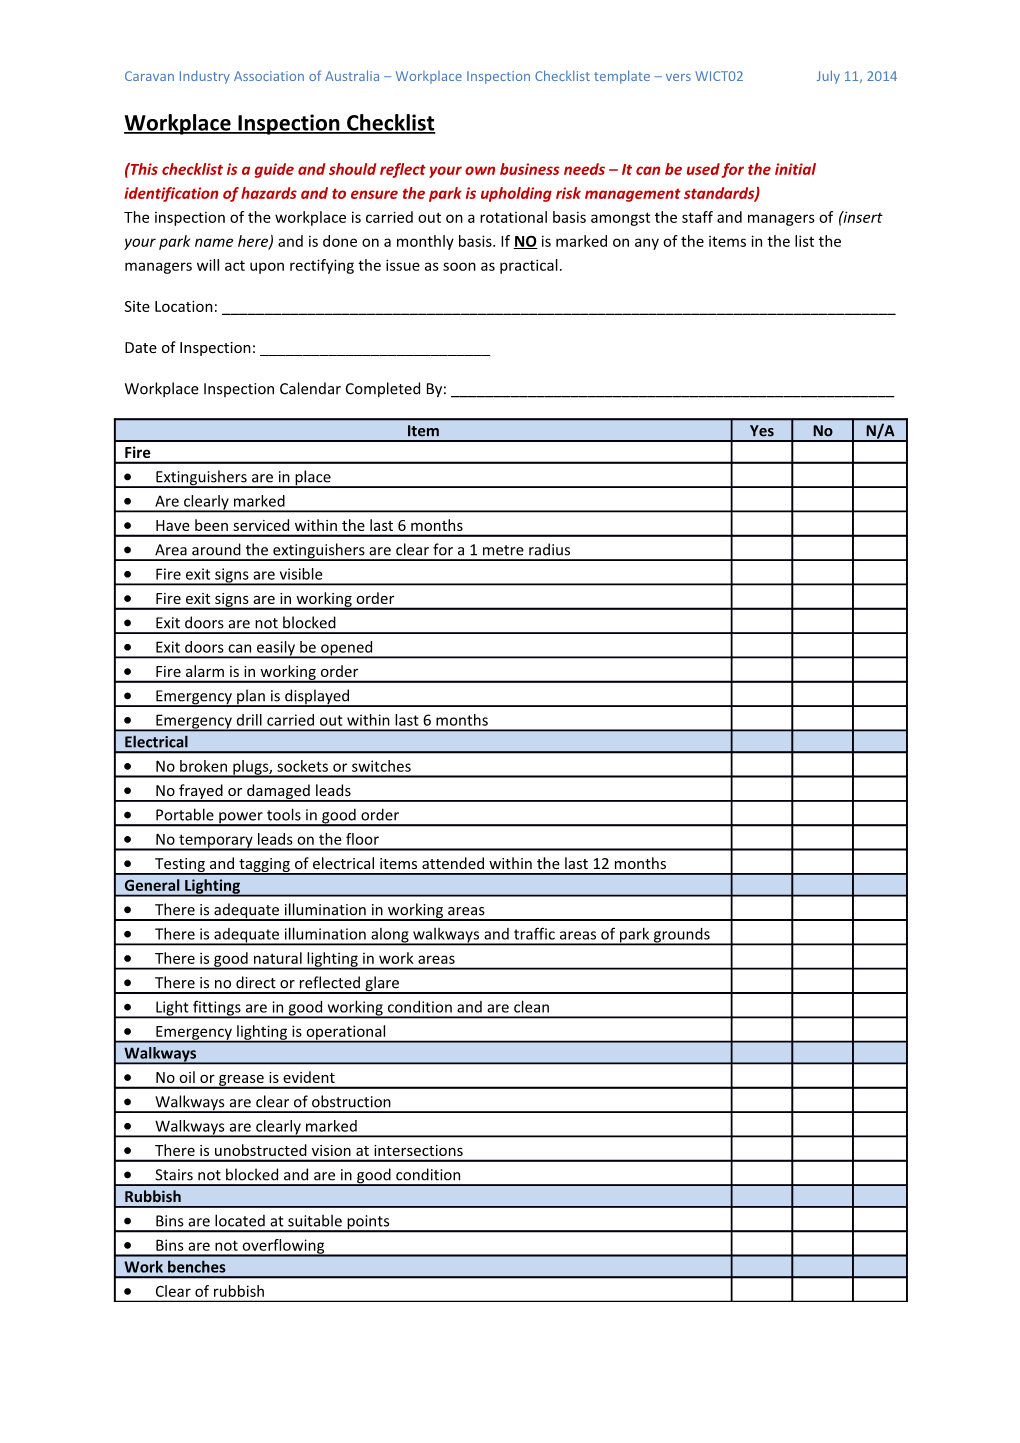 Caravan Industry Association of Australia Workplace Inspection Checklist Template Vers WICT02